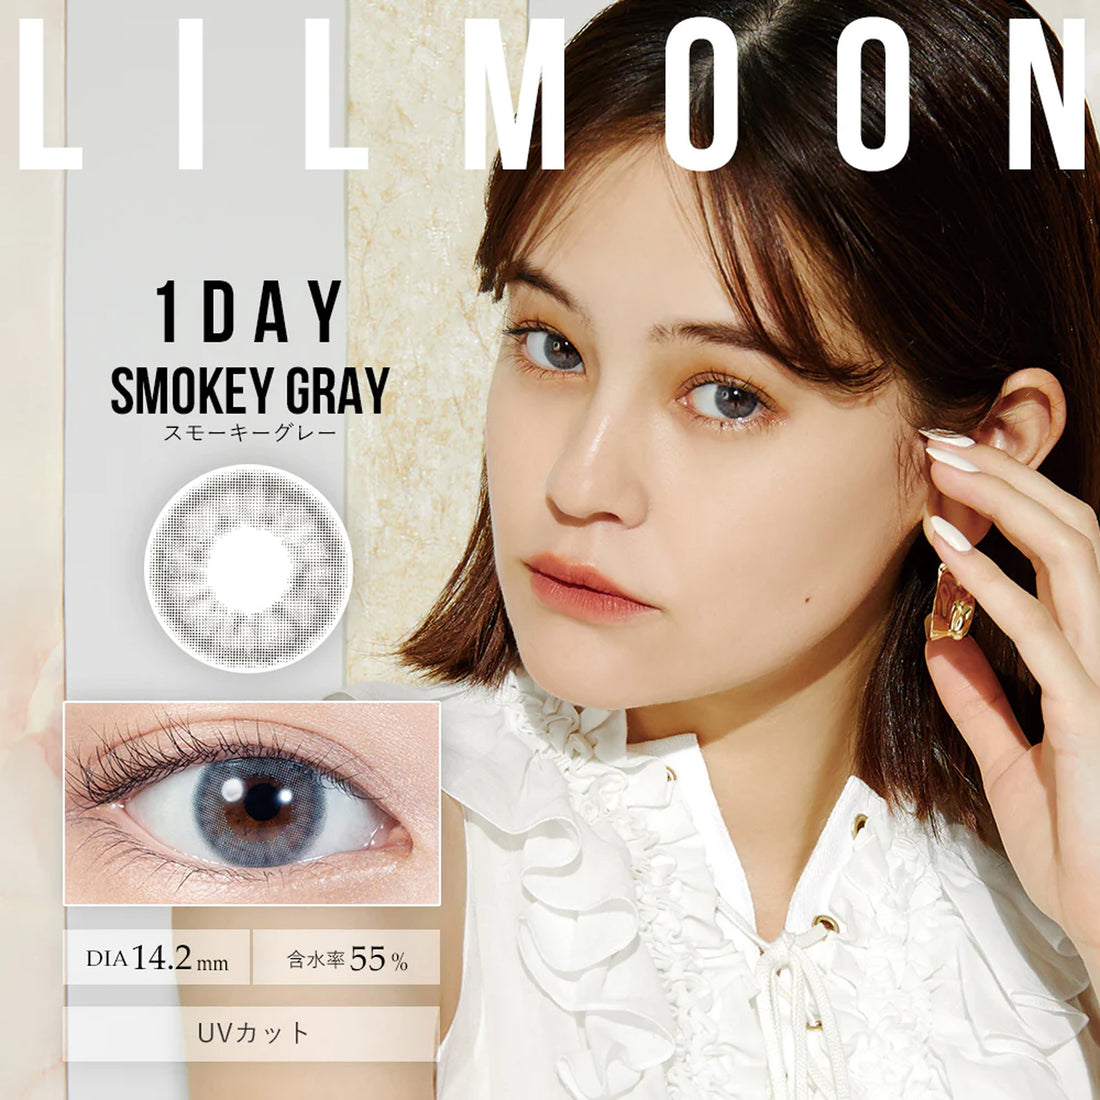 LIL MOON Daily Contact Lenses-Smokey Gray 10lenses